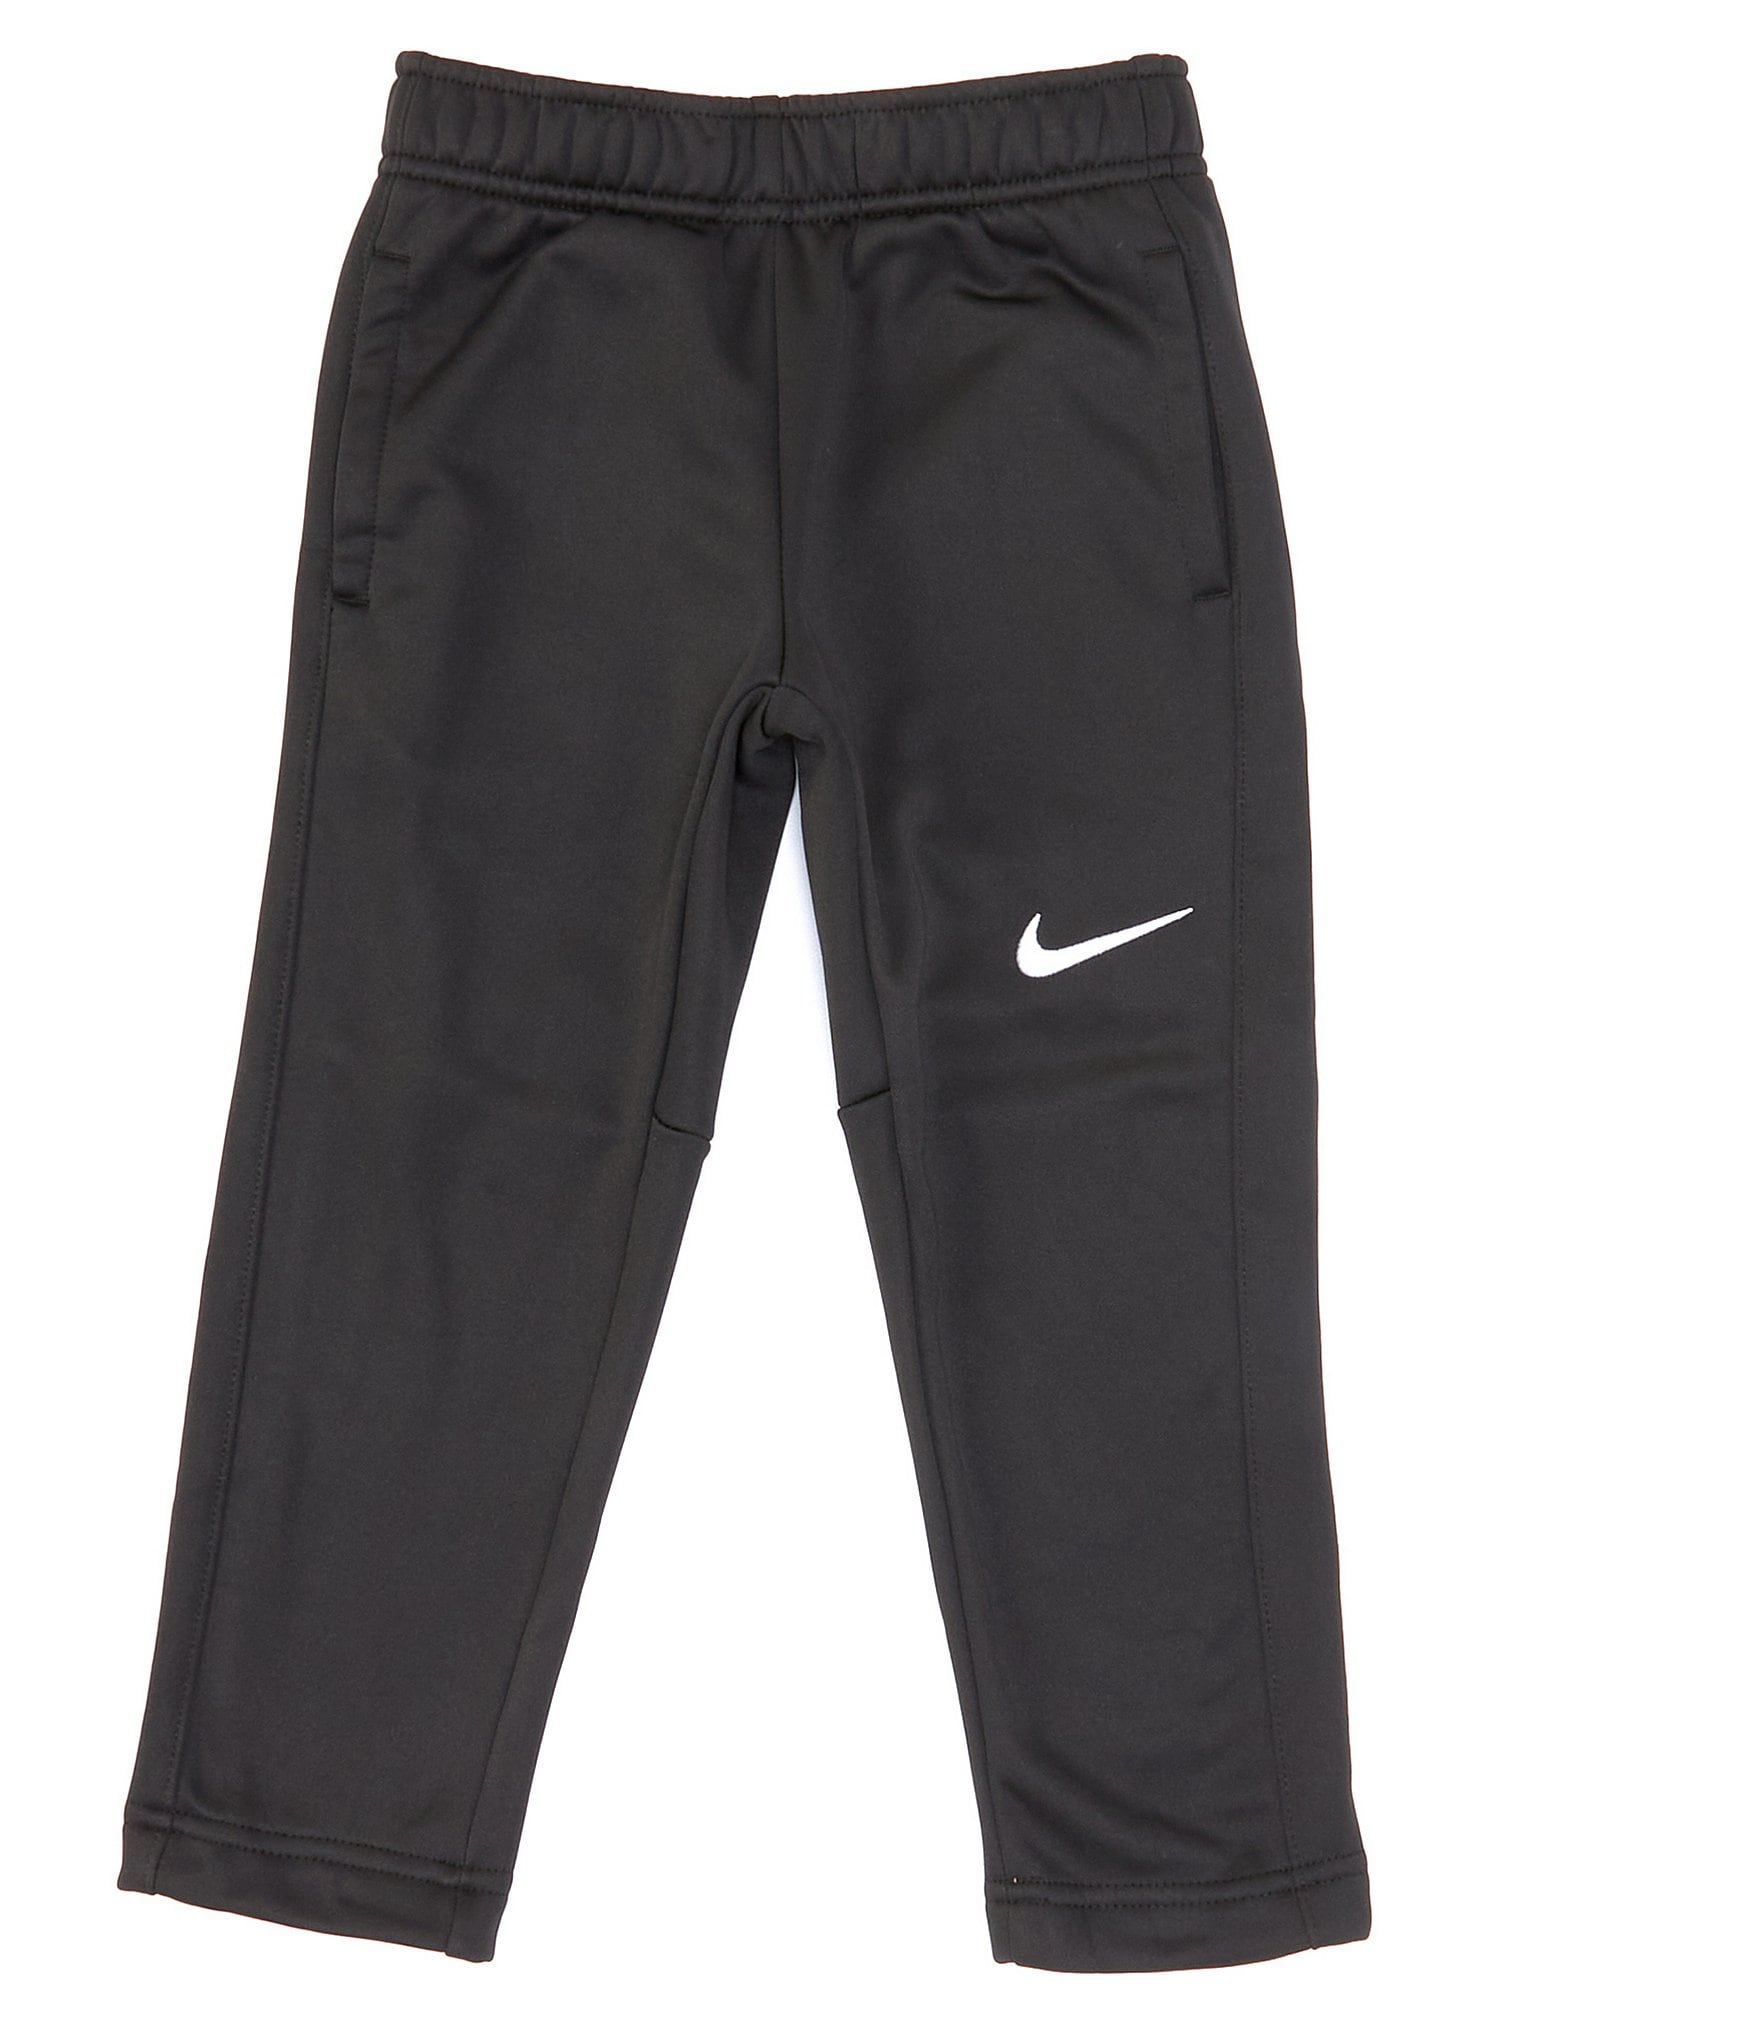 Nike Children's Apparel Boys' Toddler Fleece Jogger Pants, Black